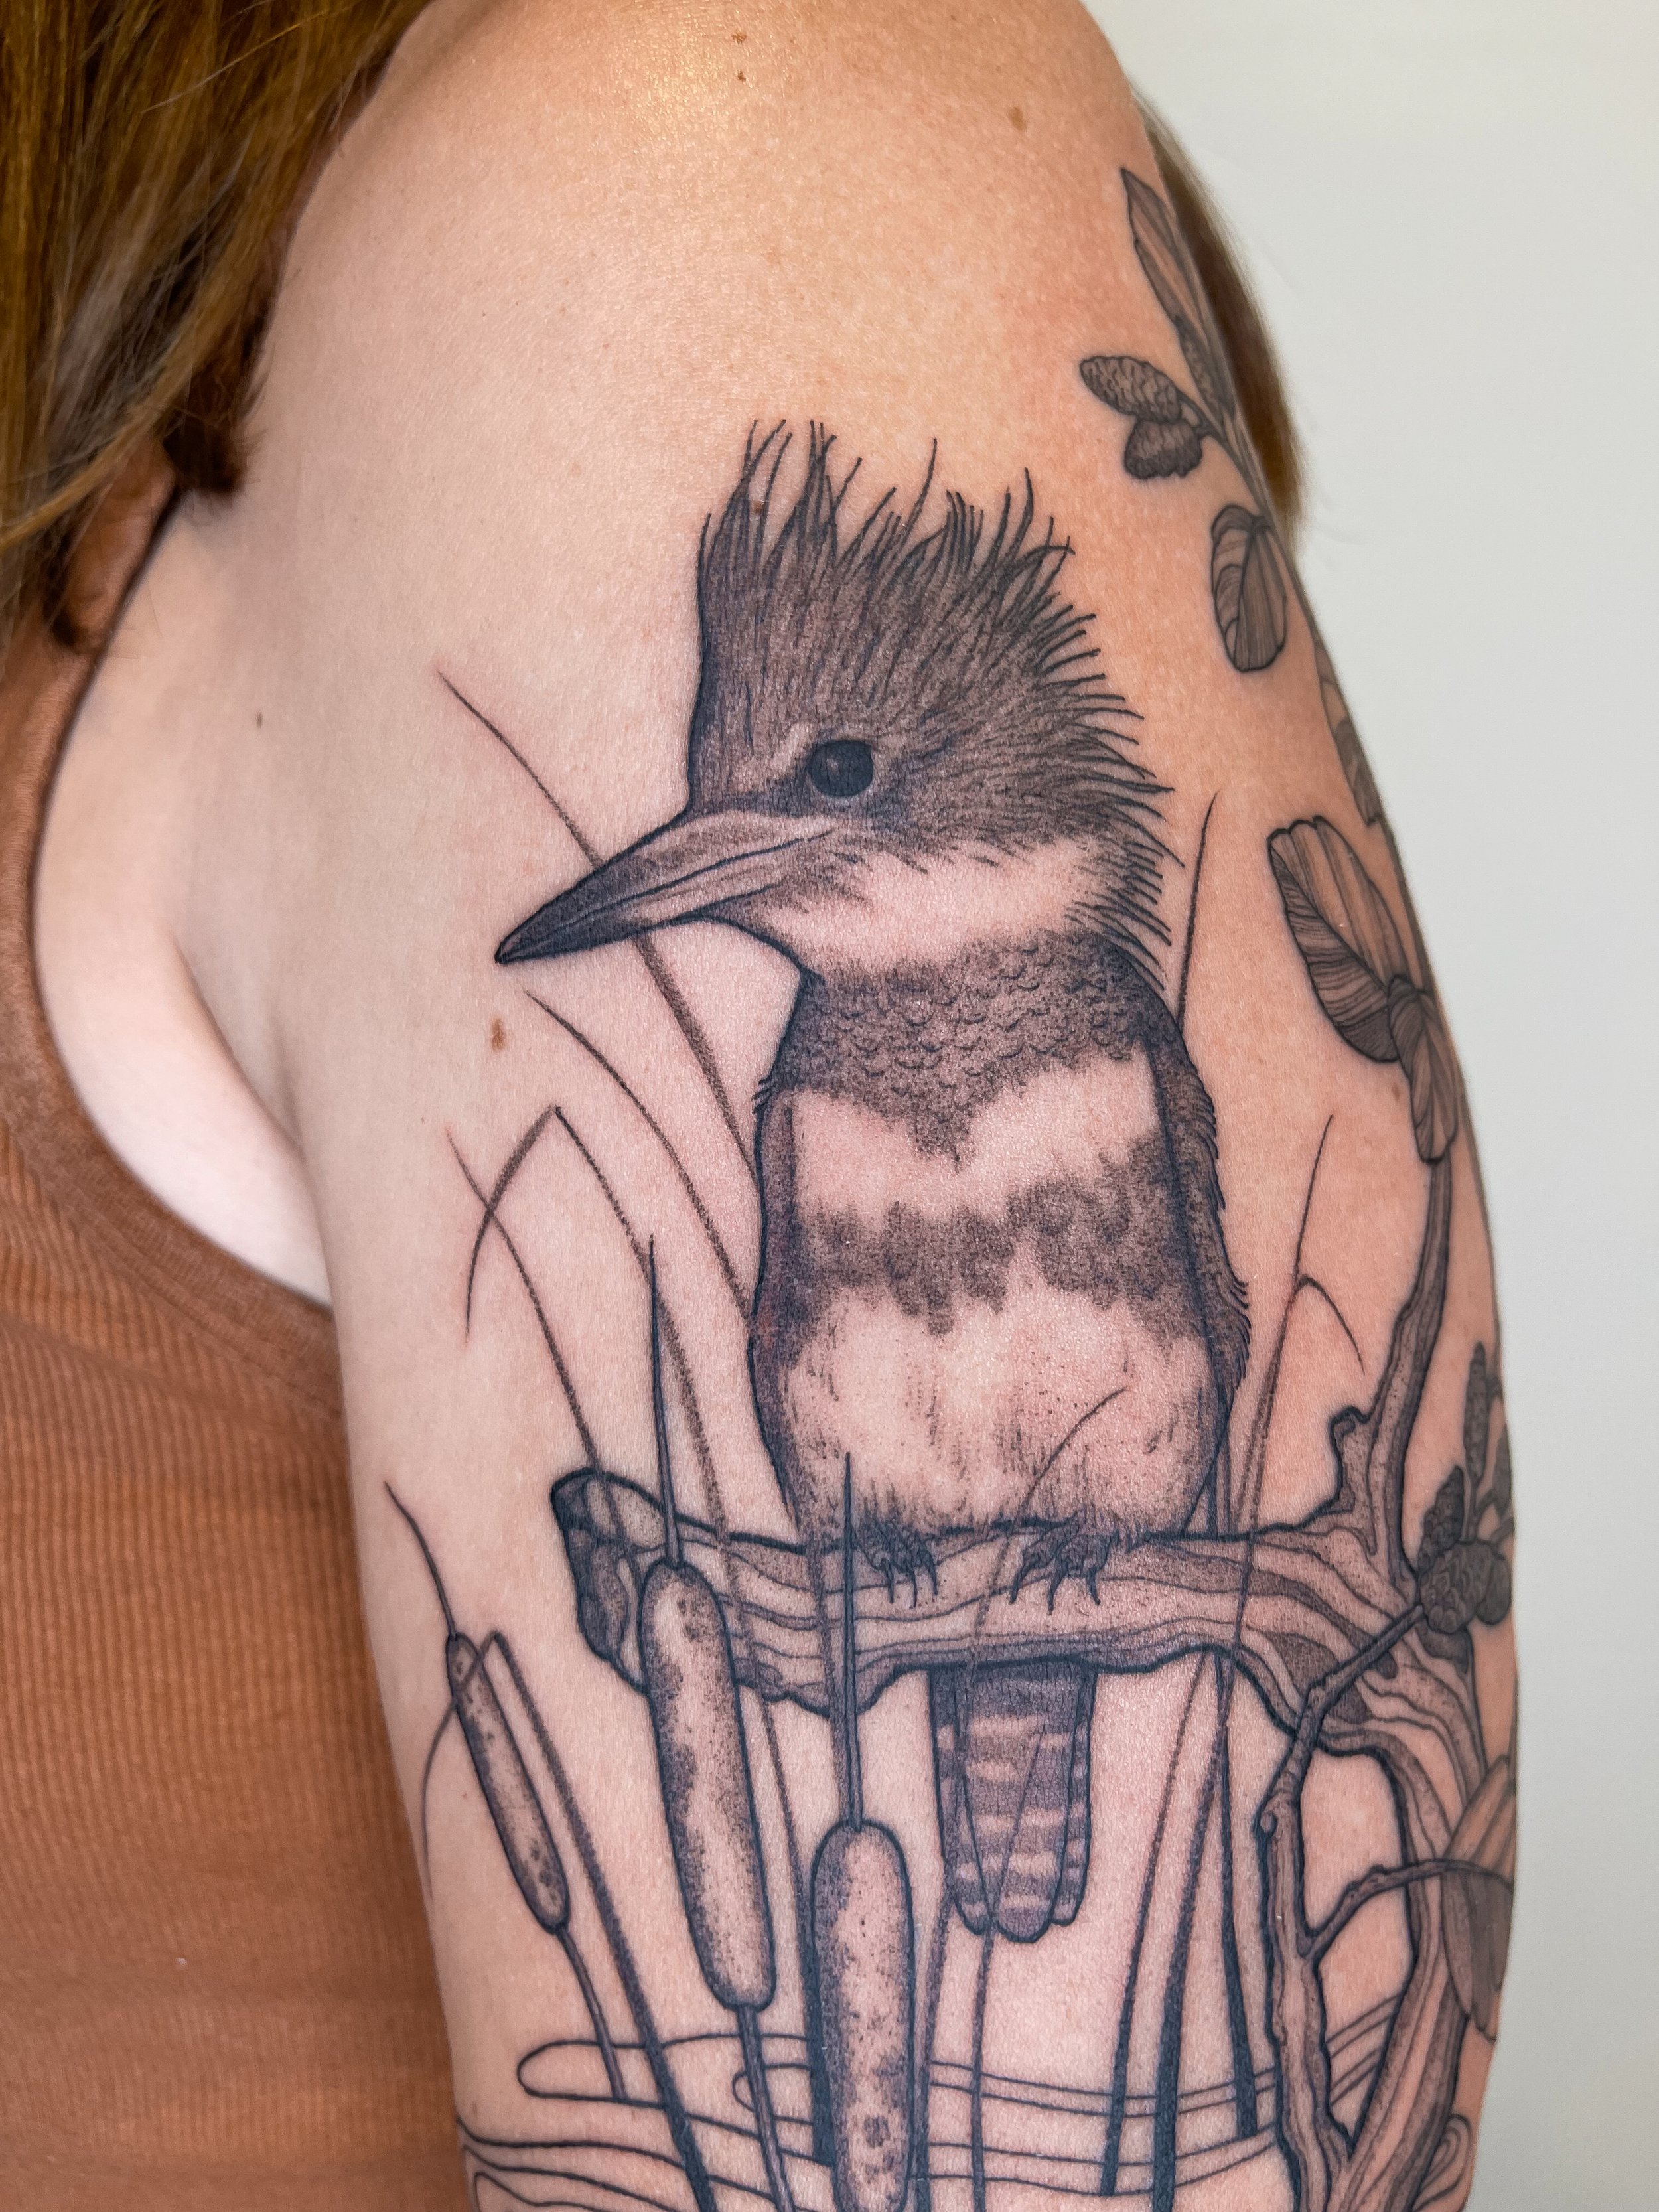 Stunning Kingfisher Tattoo